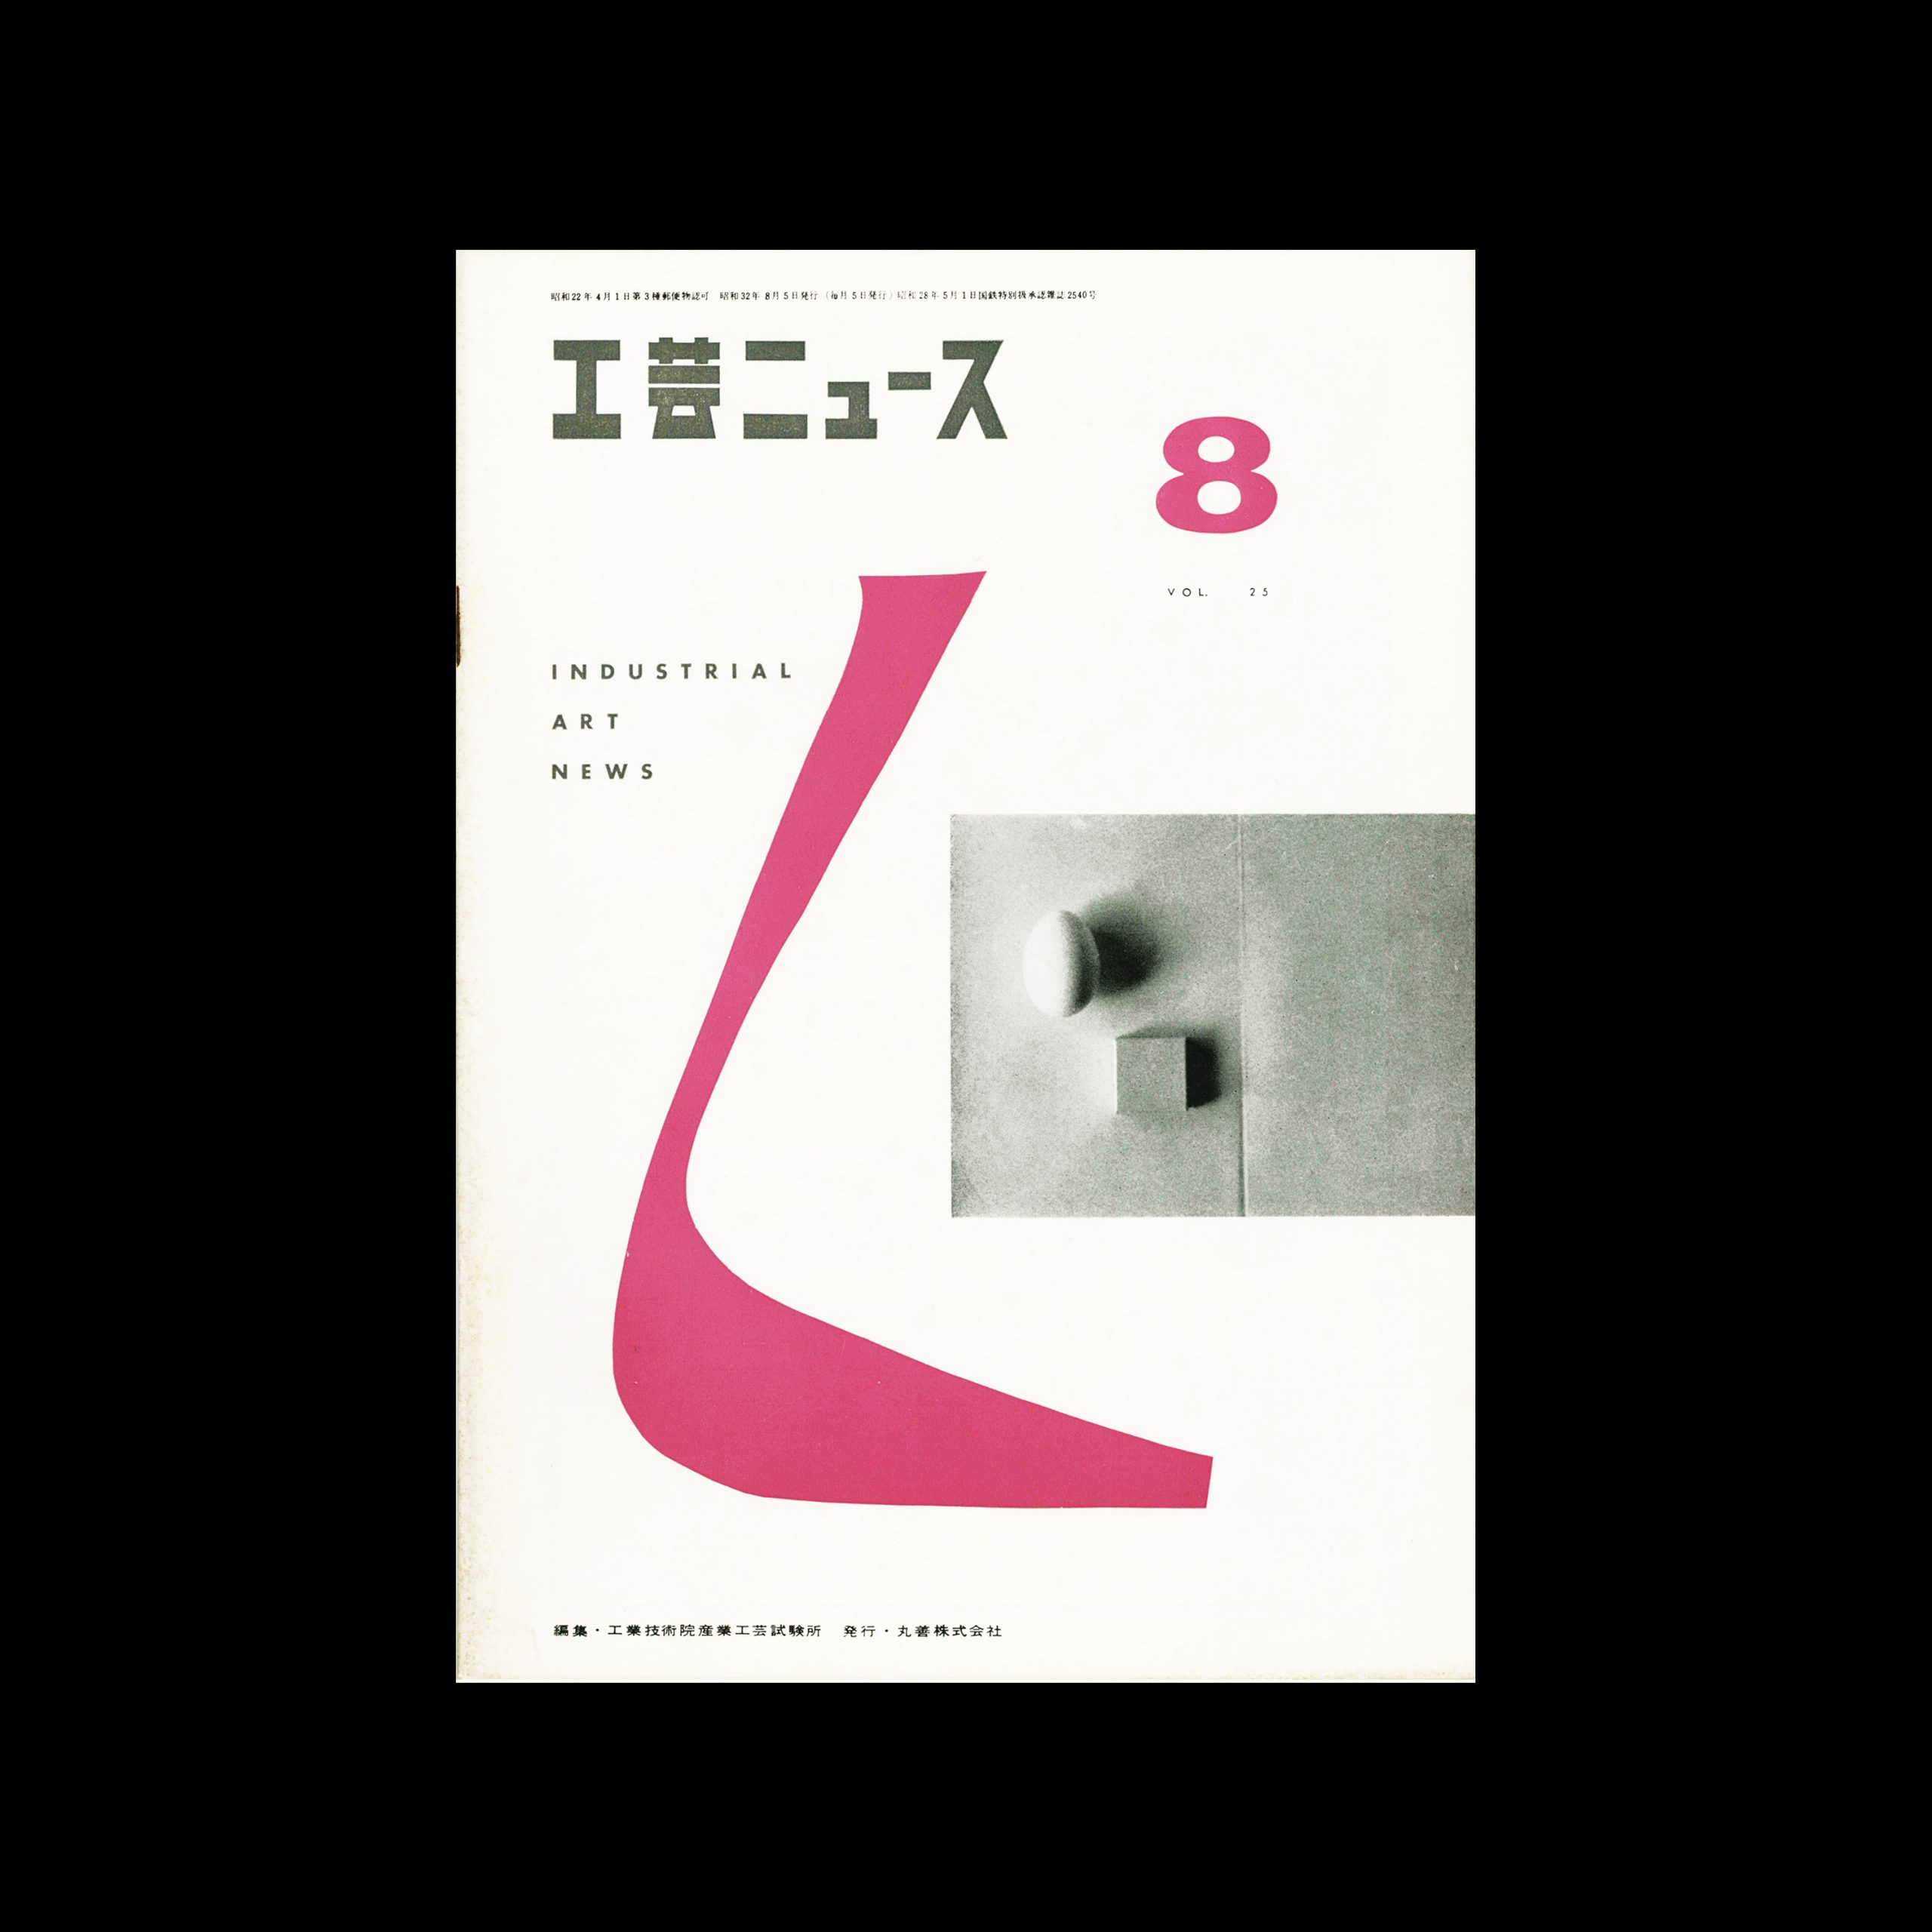 Industrial Art News - Vol. 25, No. 7, August 1957. Cover design by Katsue Kitasono